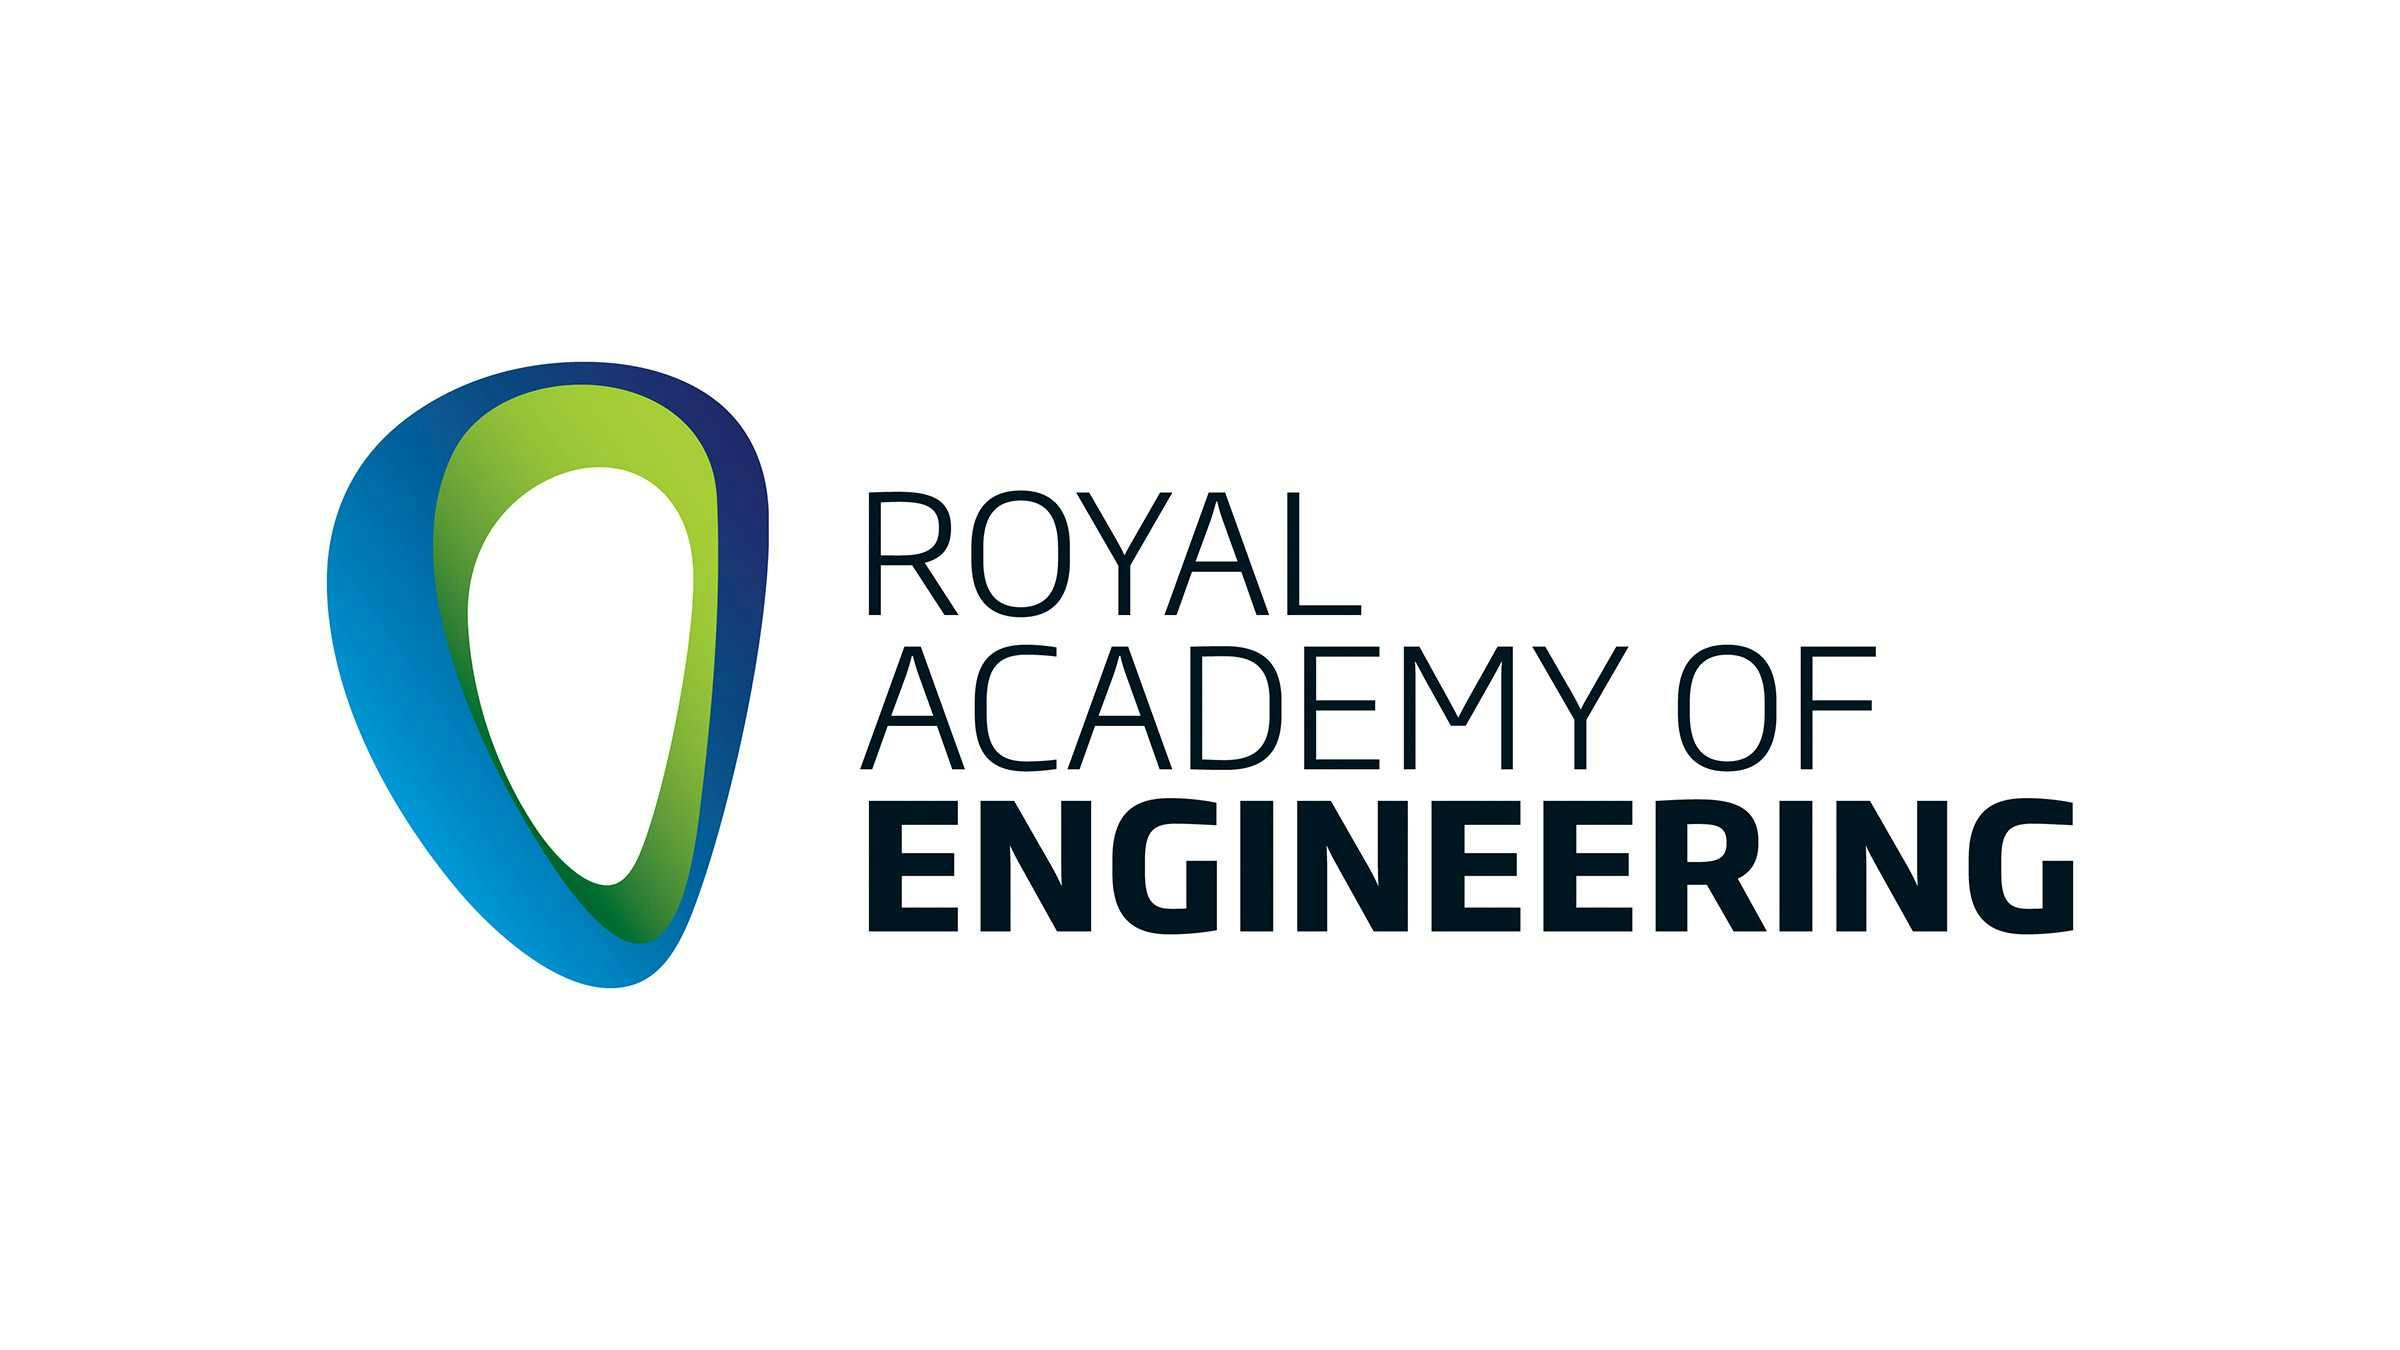 Royal Academy of Engineering logo on white background 